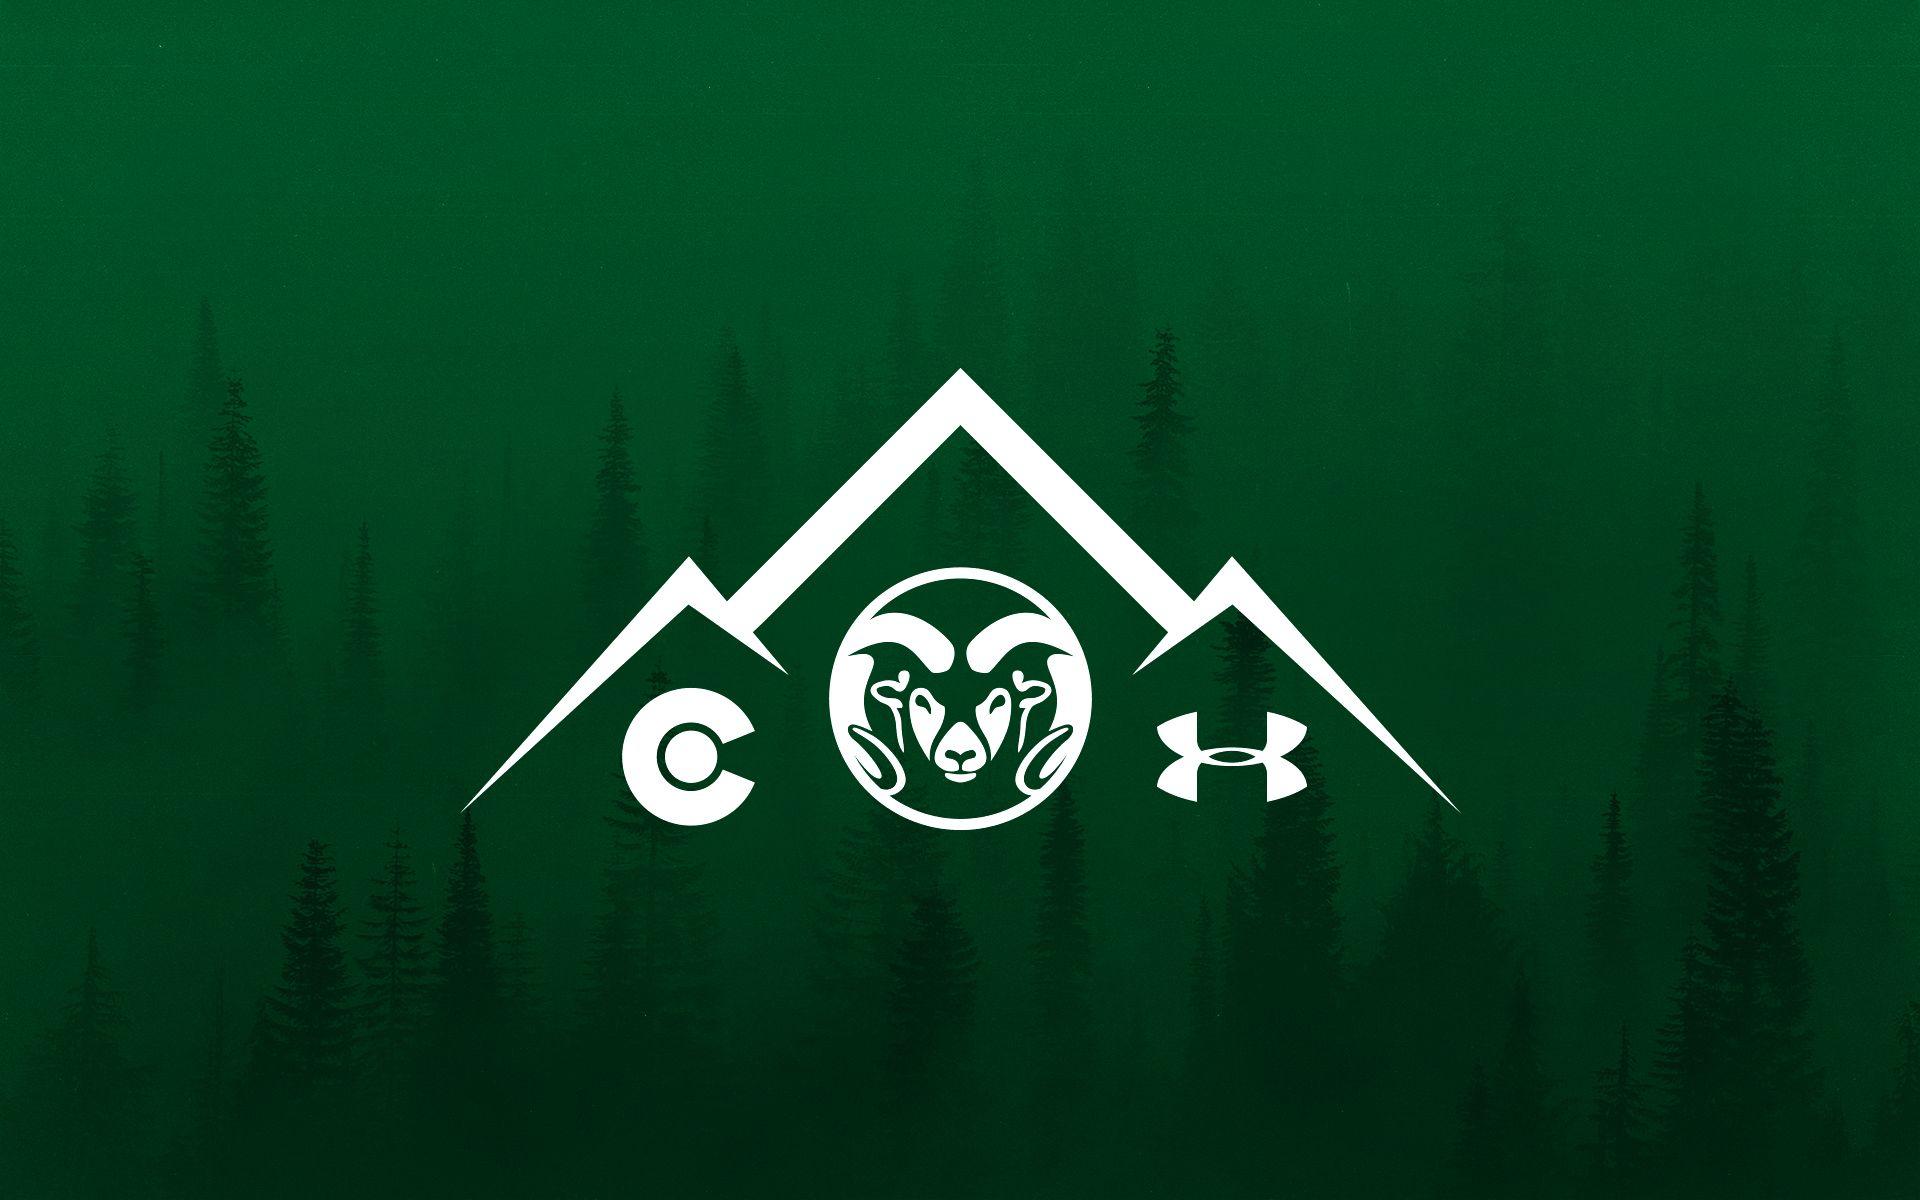 Green and Gold Ram Logo - Rams Creative Wallpaper State University Athletics